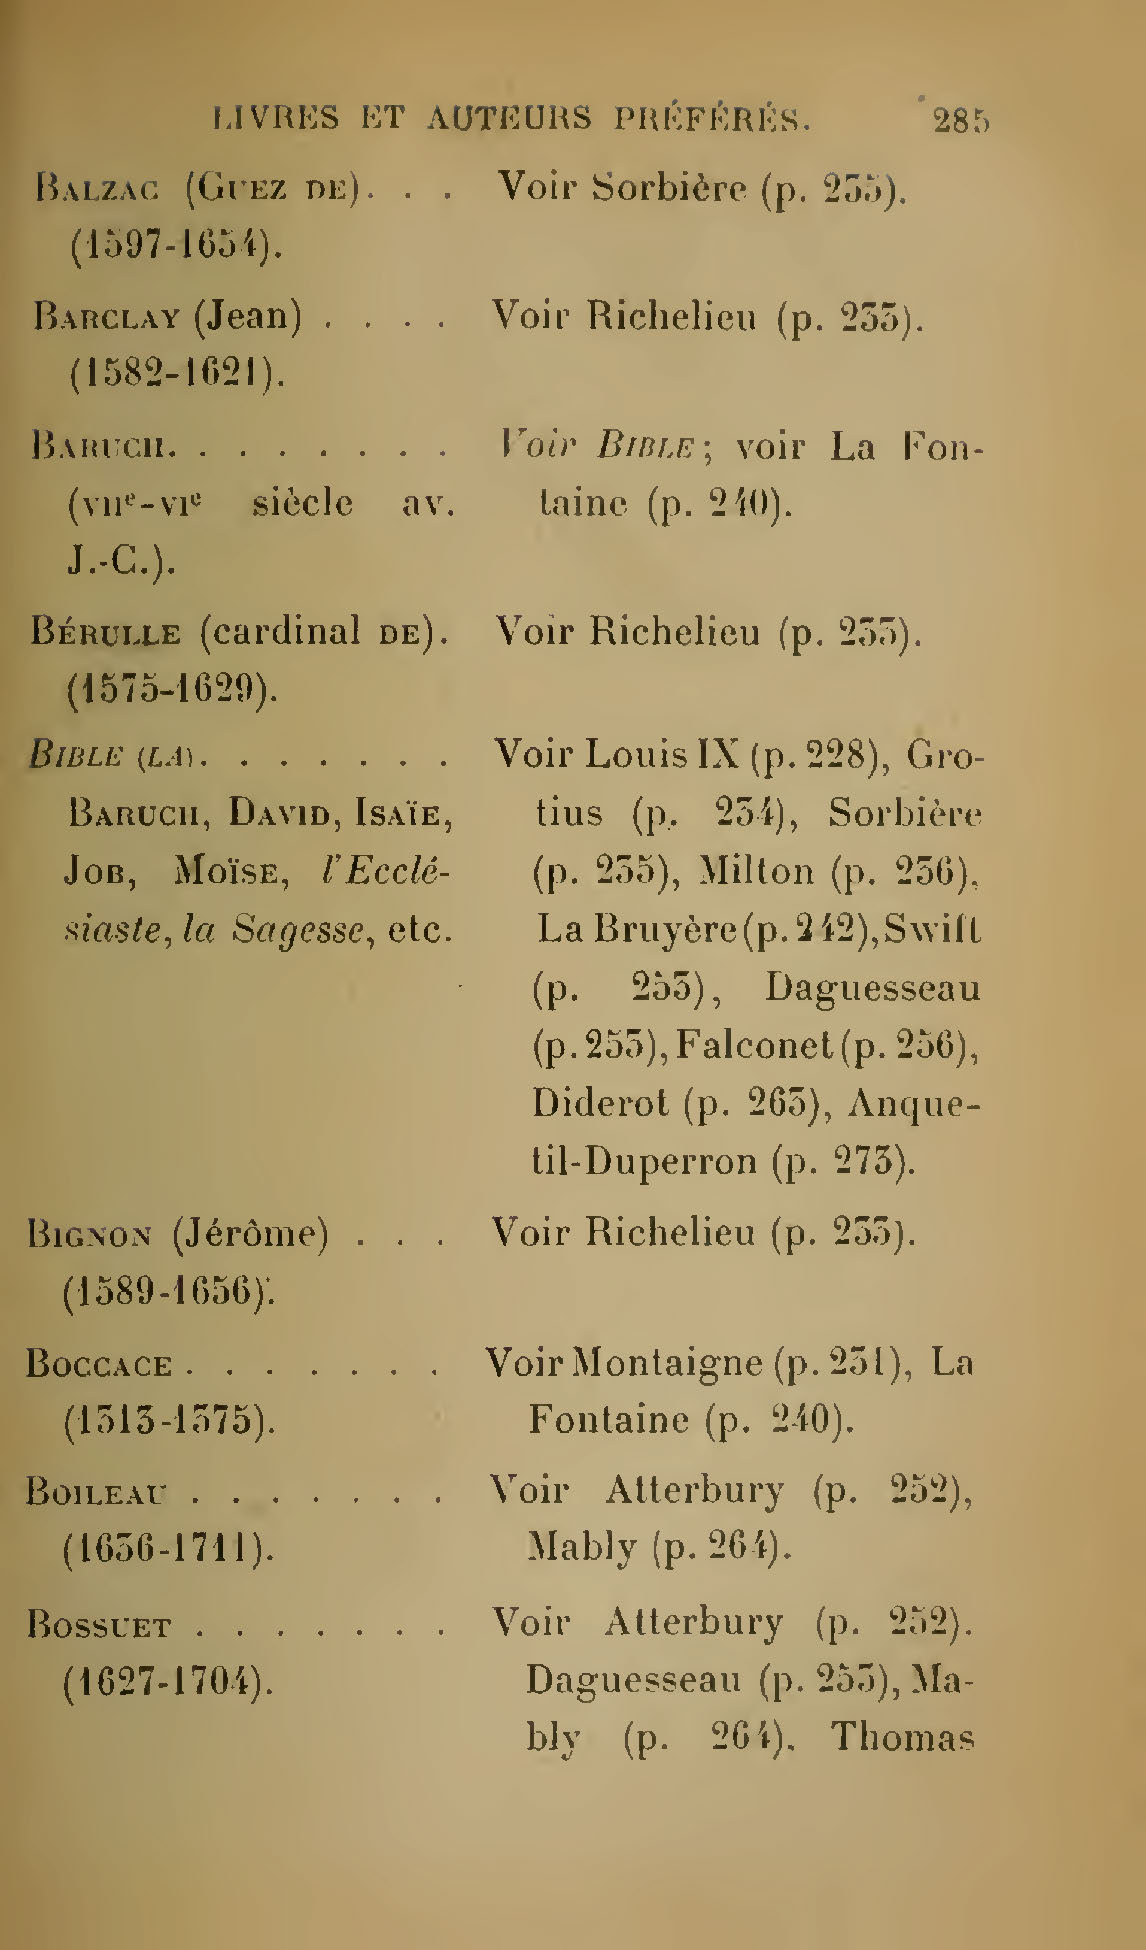 Albert Cim, Le Livre, t. I, p. 285.